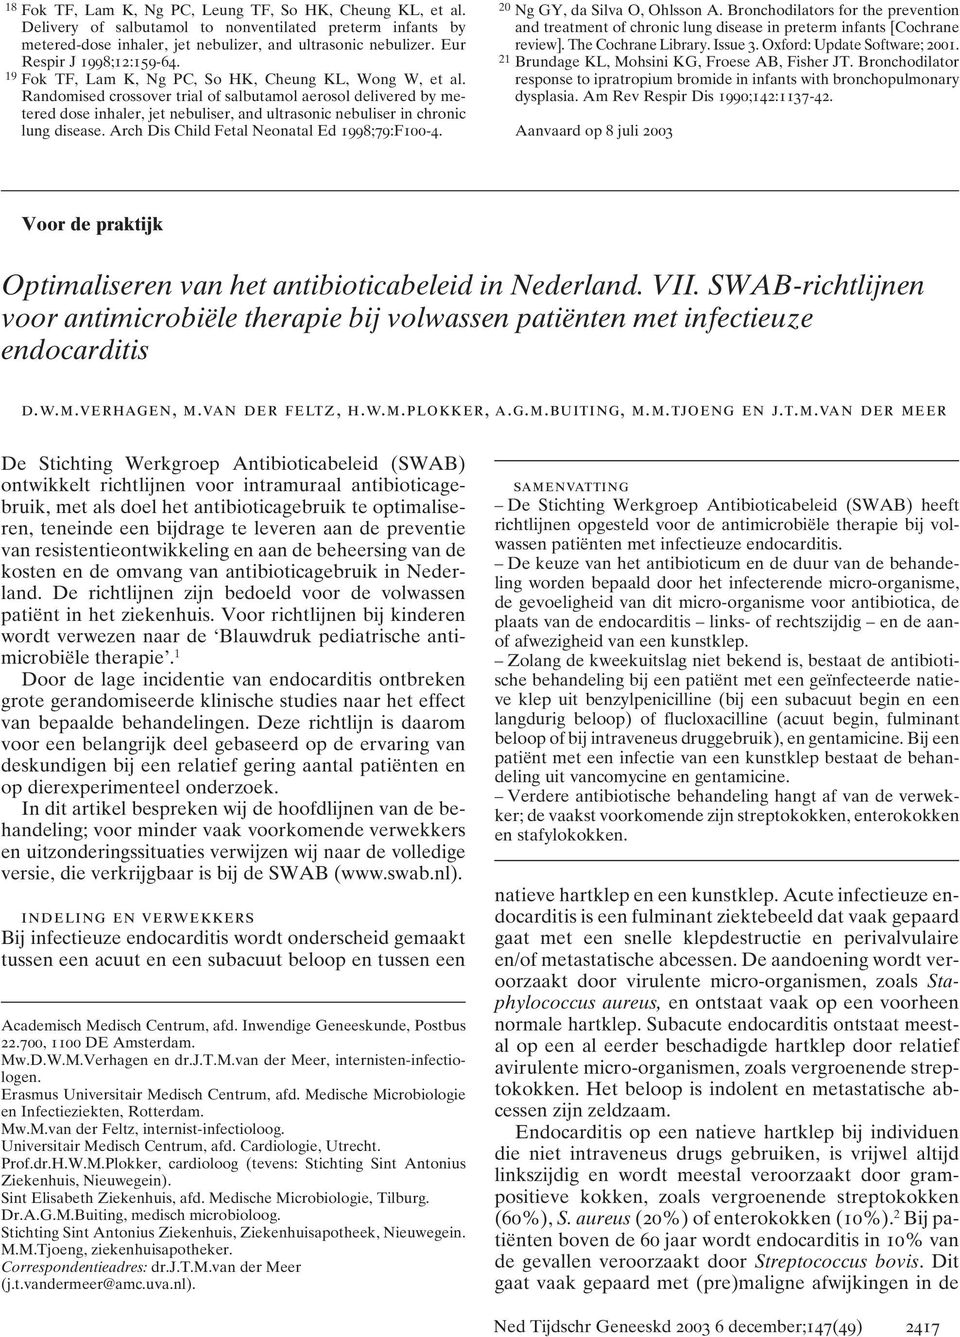 Randomised crossover trial of salbutamol aerosol delivered by metered dose inhaler, jet nebuliser, and ultrasonic nebuliser in chronic lung disease. Arch Dis Child Fetal Neonatal Ed 1998;79:F100-4.